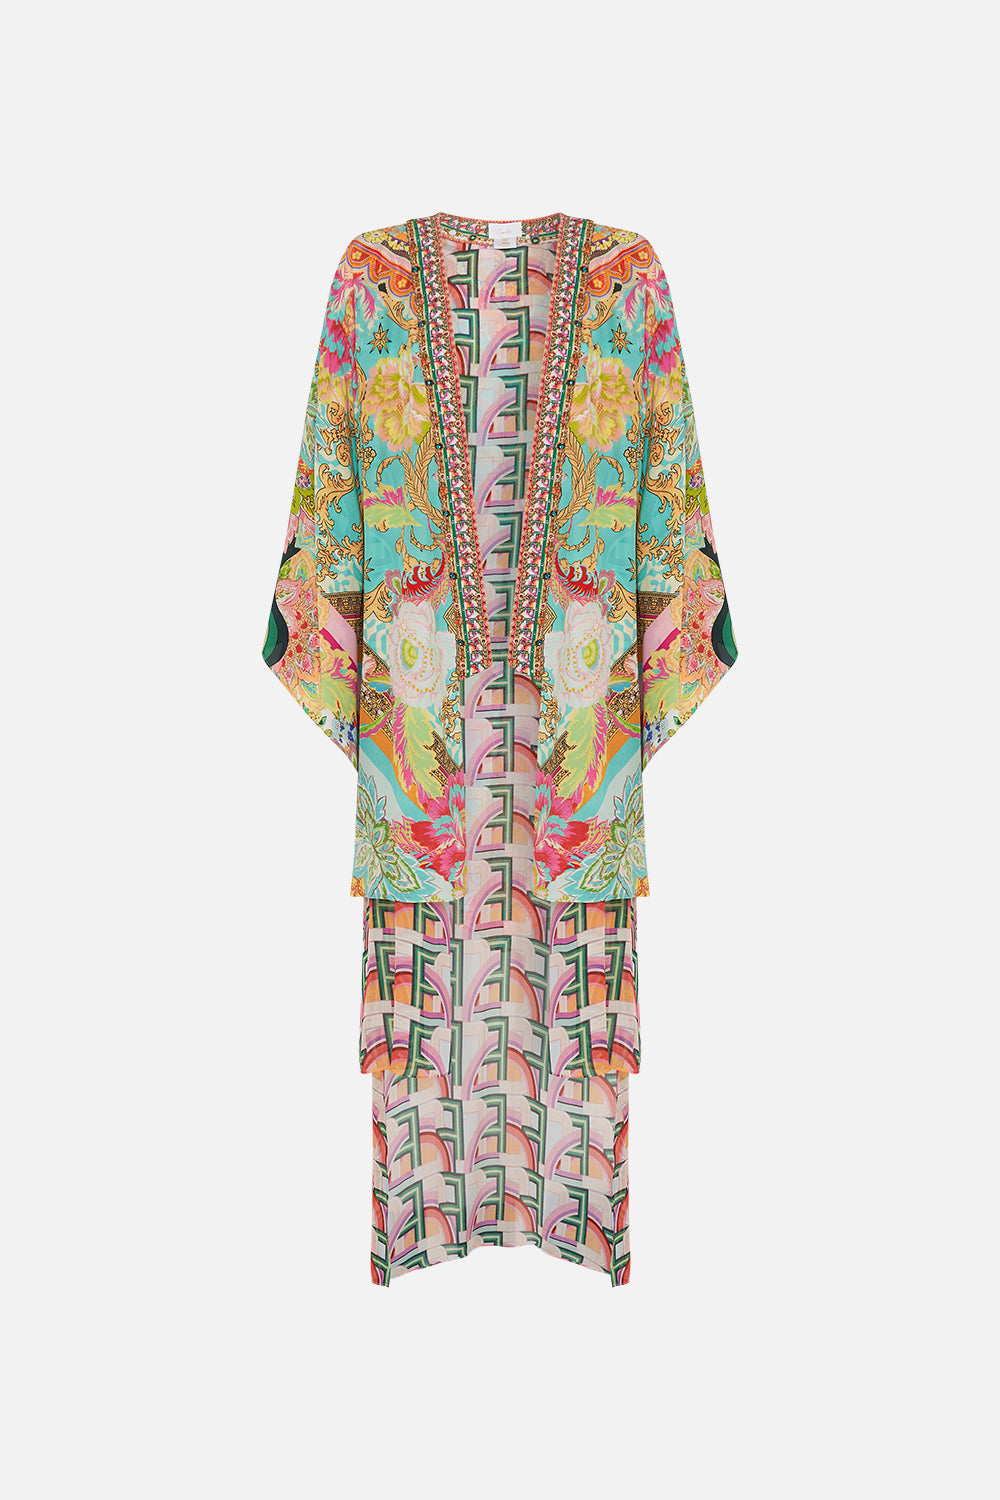 Product view of CAMILLA silk kimono in An Italian Welcome print